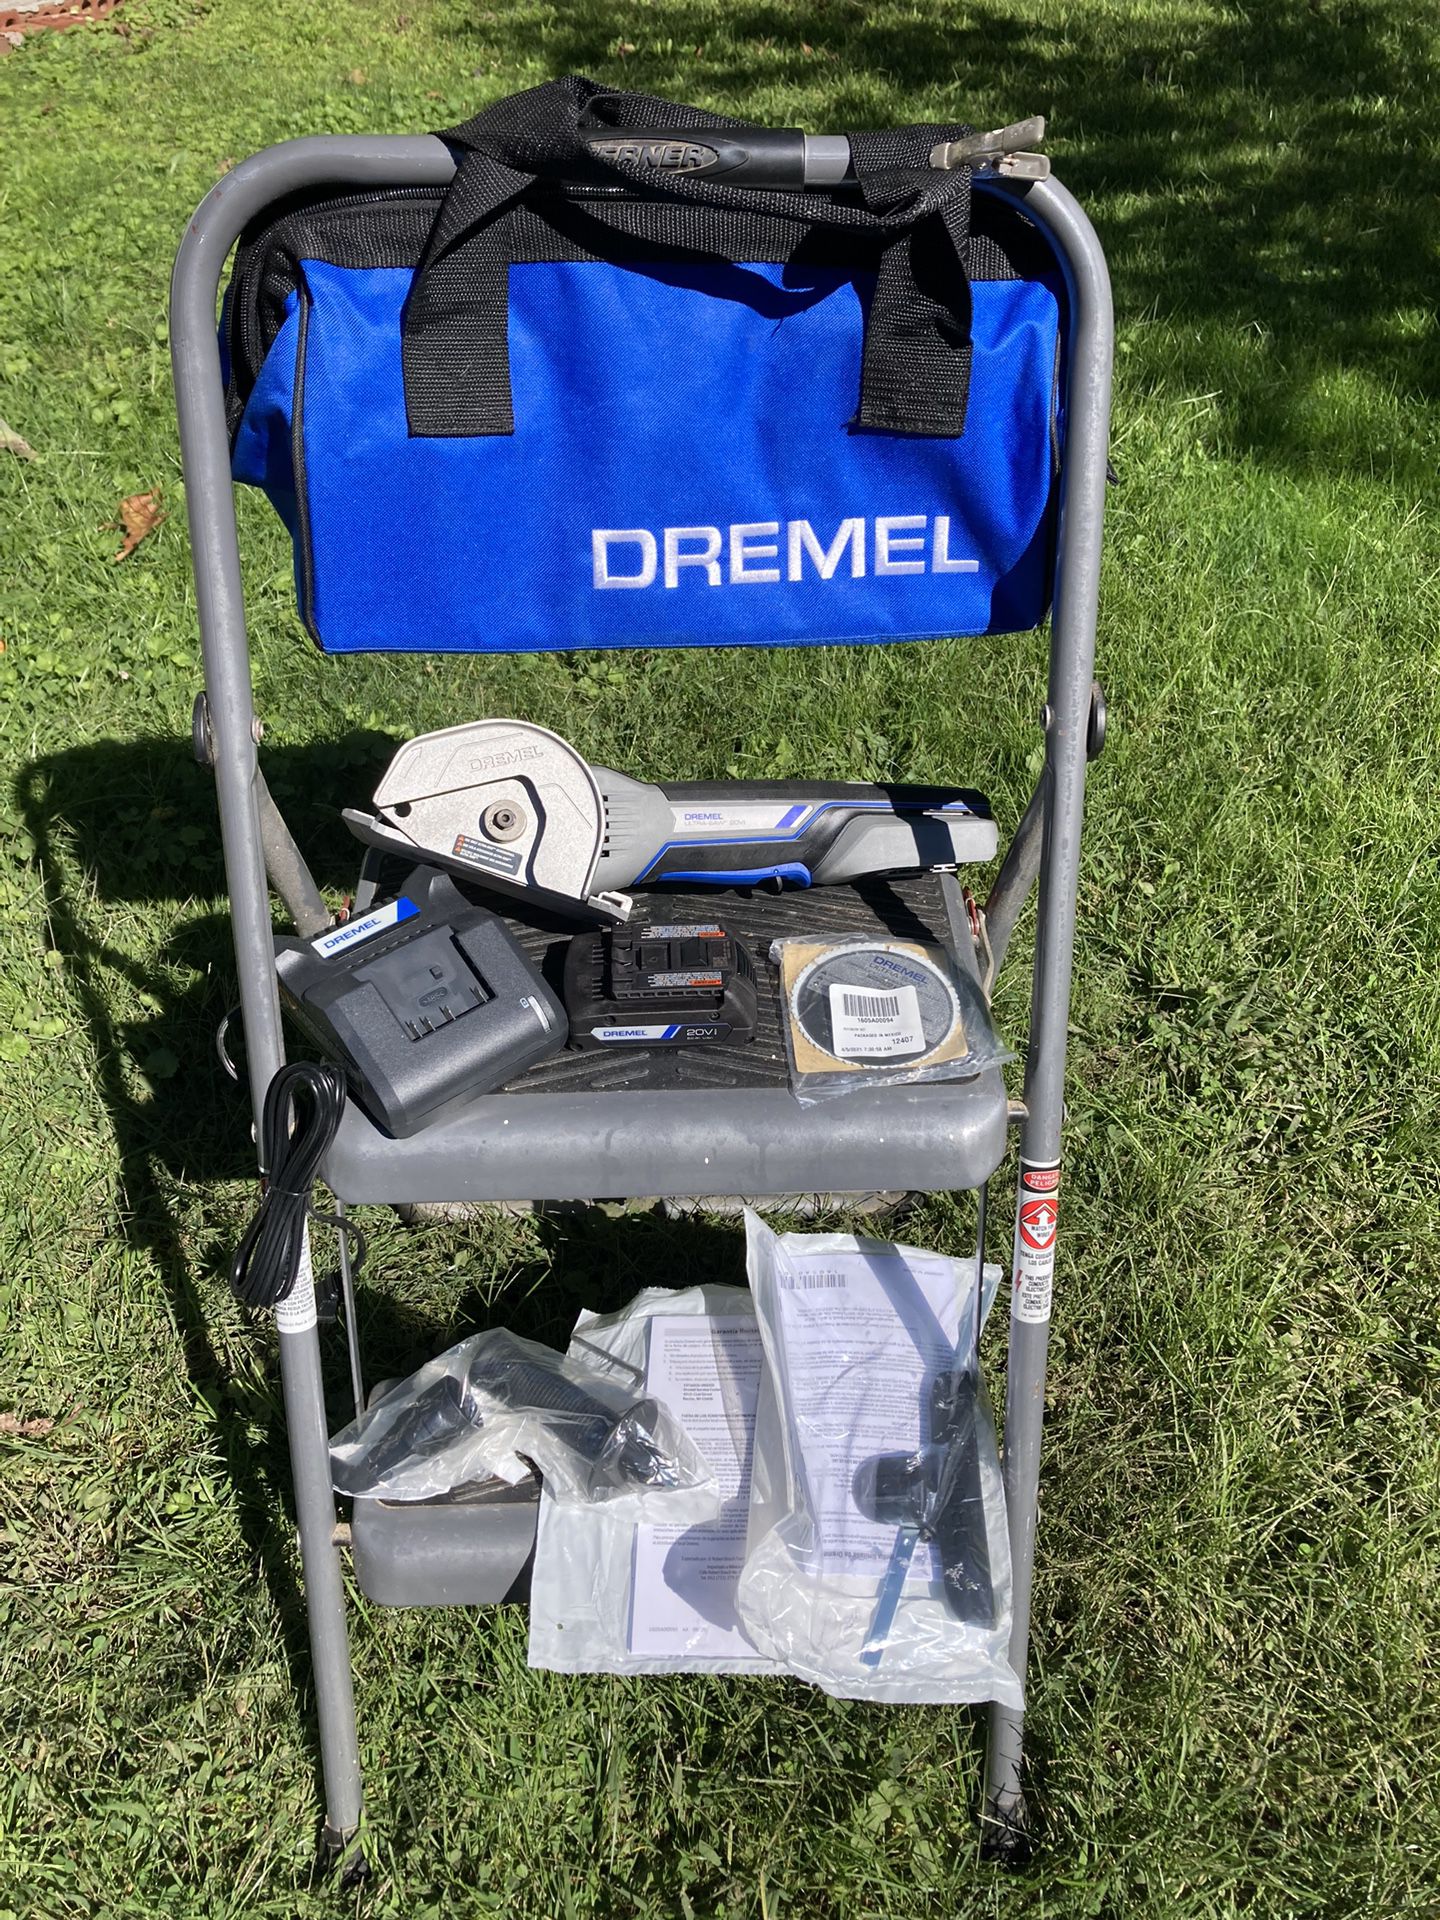 Dremel Battery Cut Off Saw And Bosch Bit Set